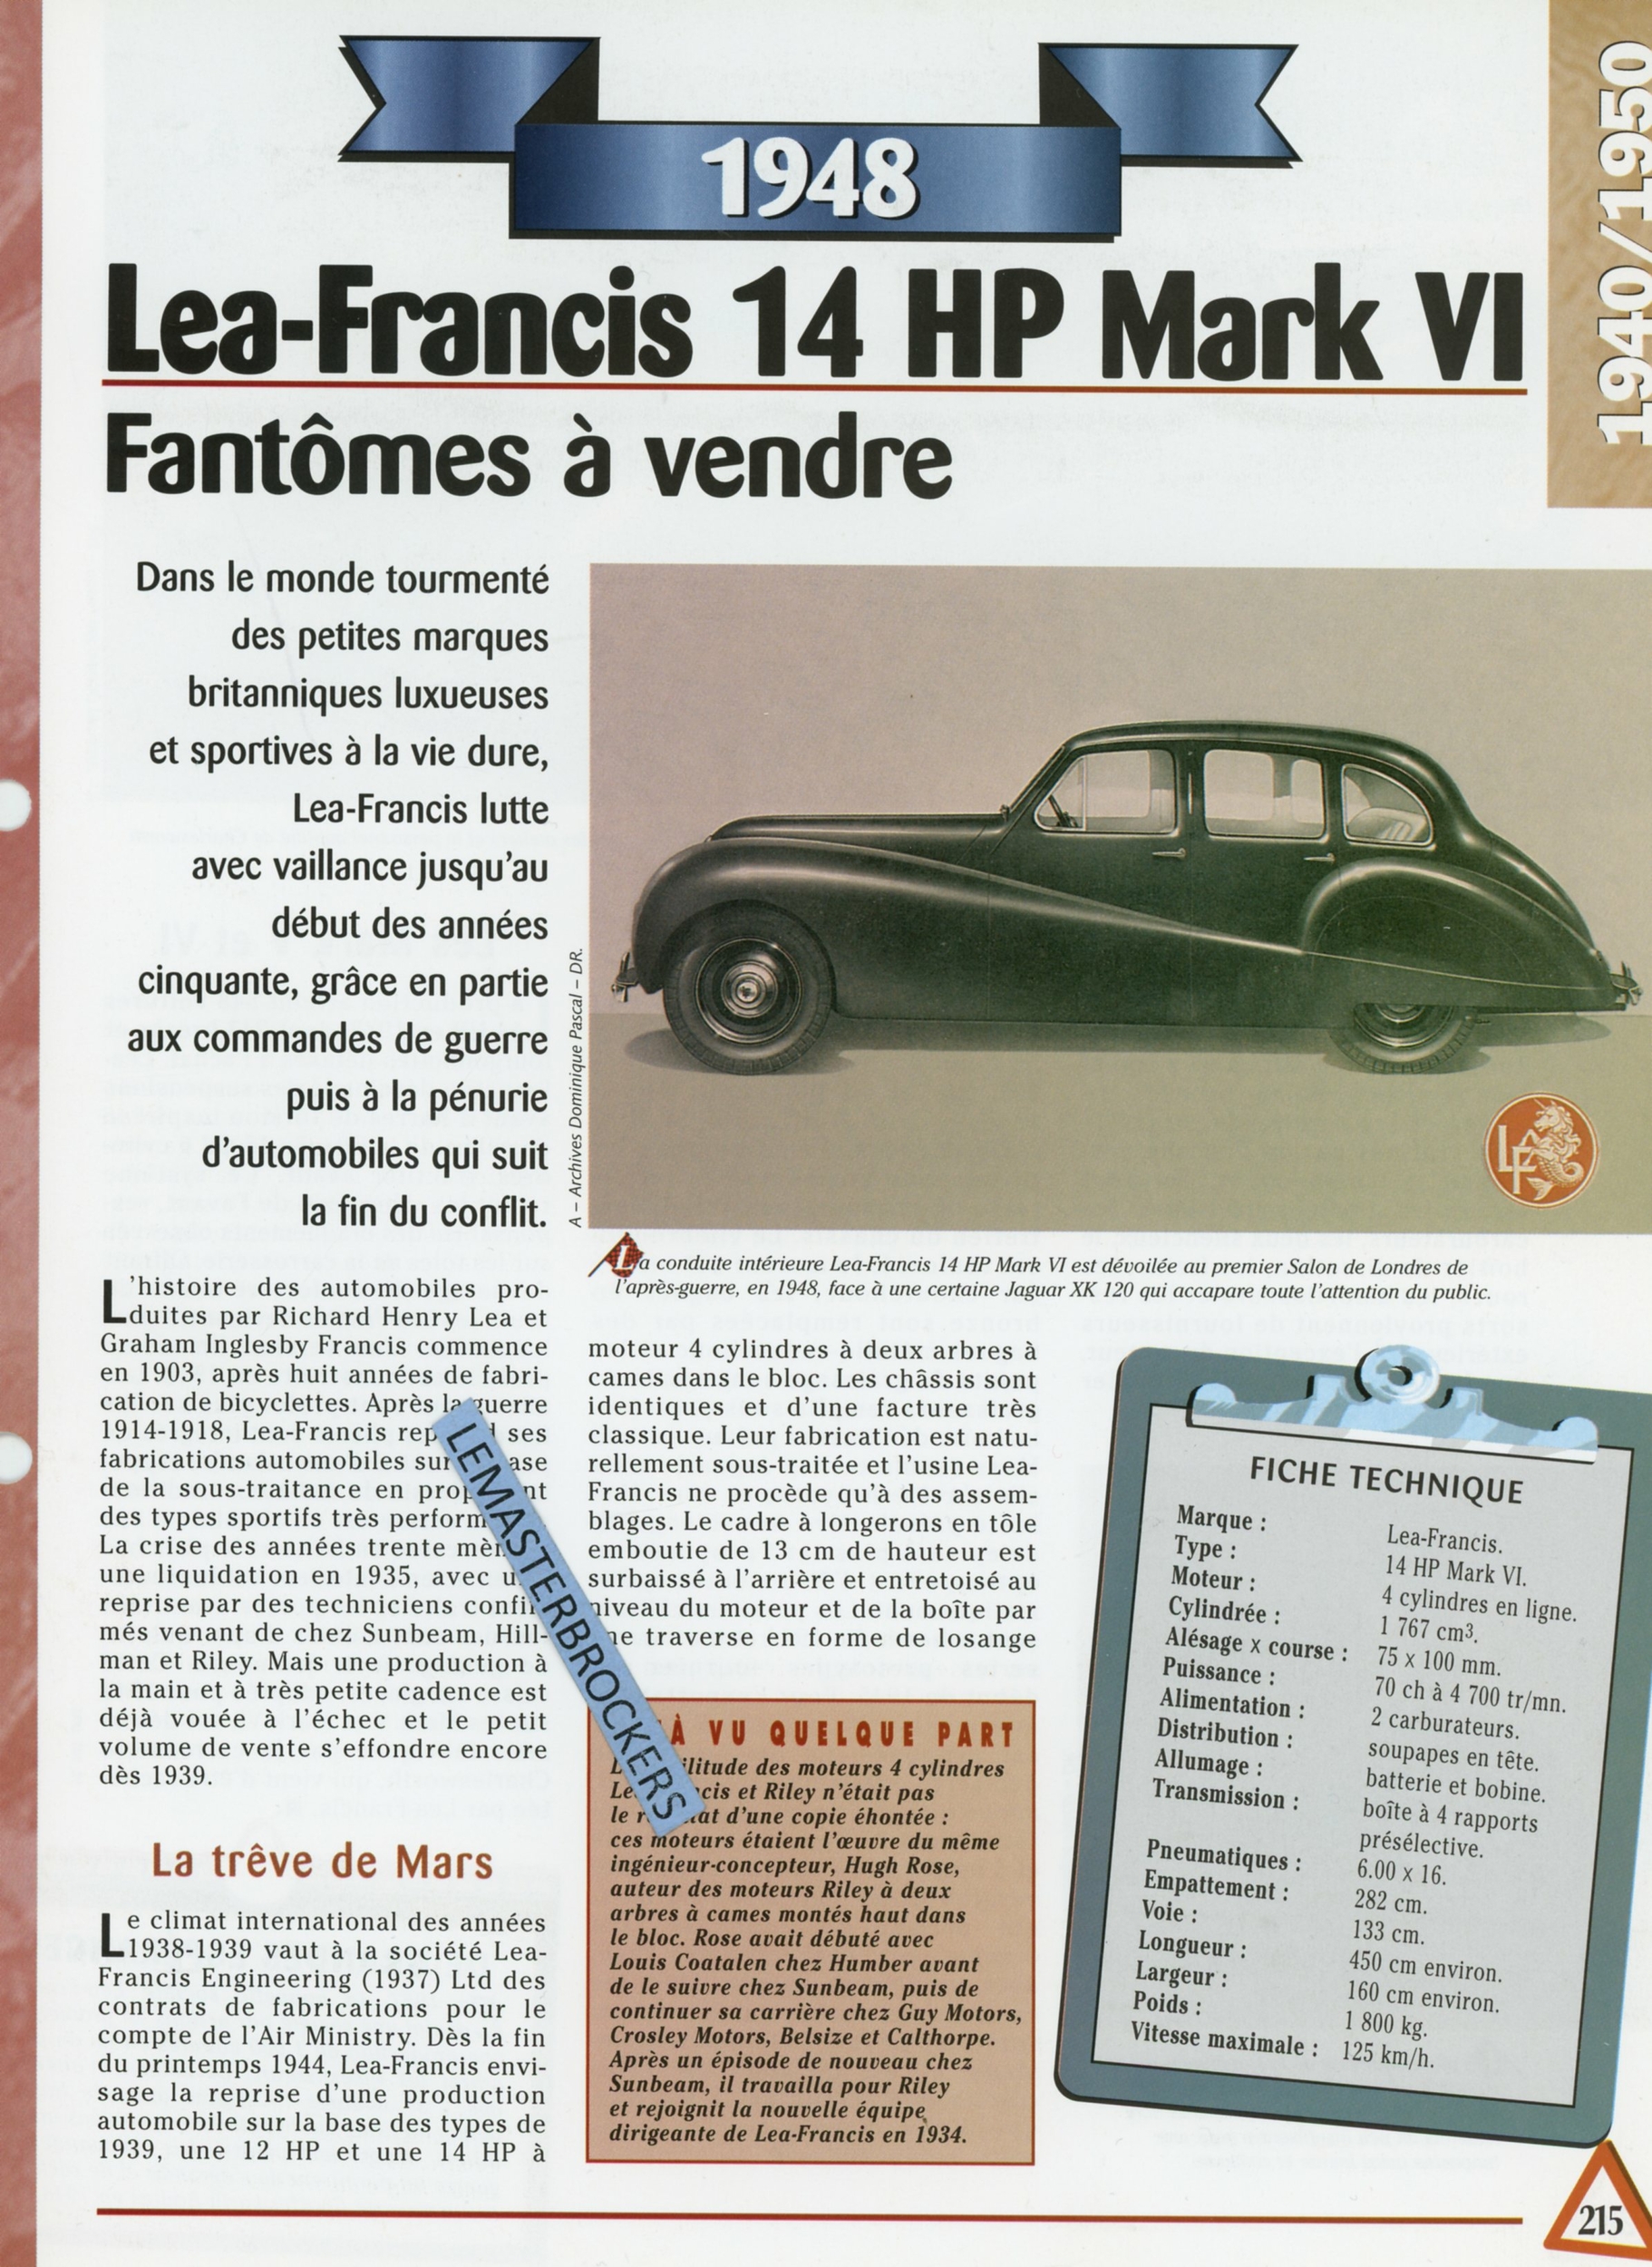 LEA-FRANCIS 14 HP MARK VI 1948 - FICHE TECHNIQUE - FICHE AUTO - HACHETTE LITTÉRATURE AUTOMOBILE